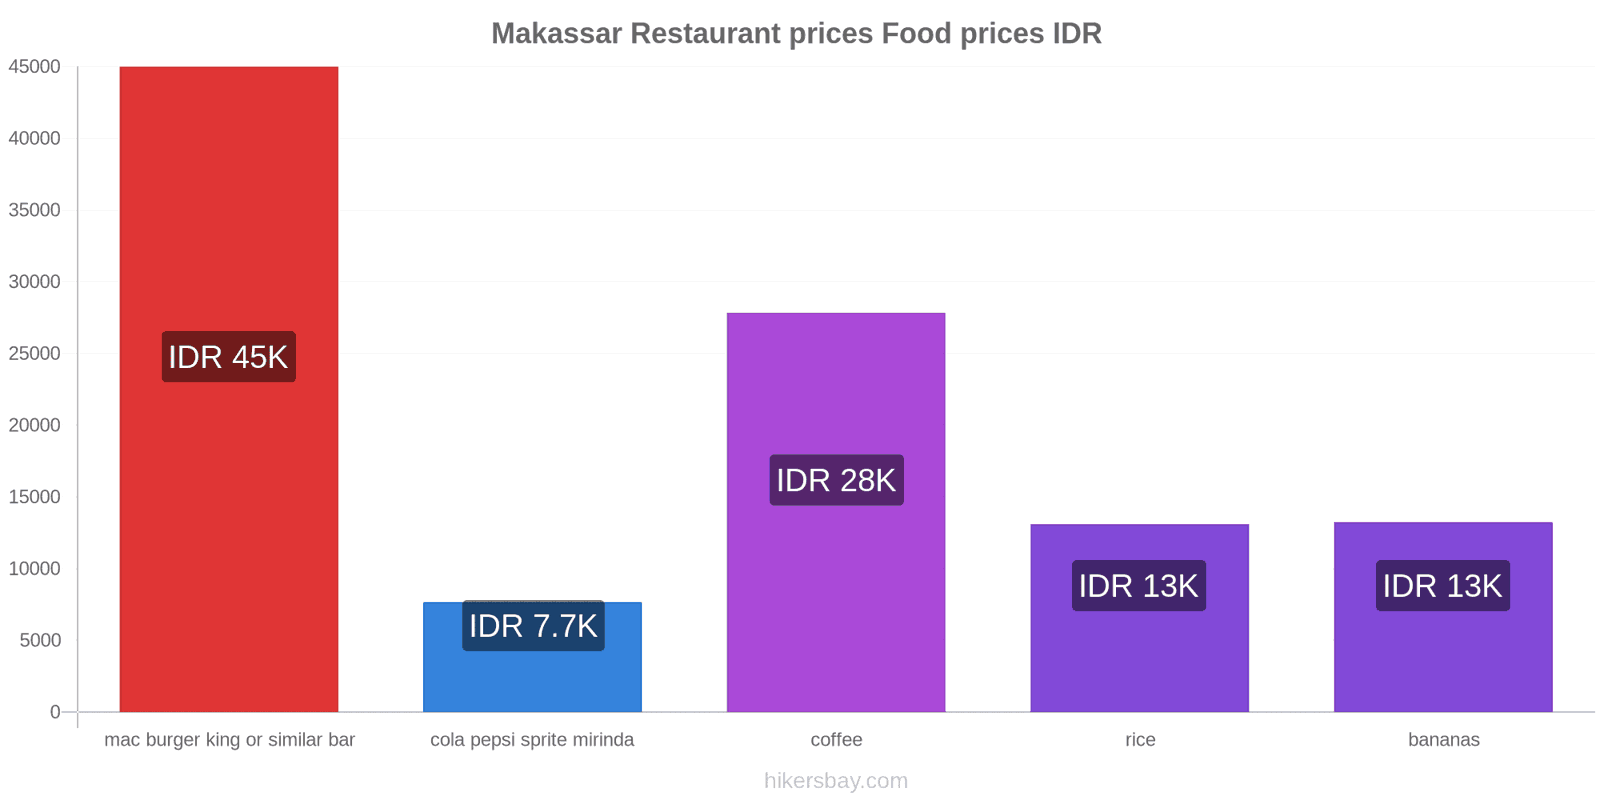 Makassar price changes hikersbay.com